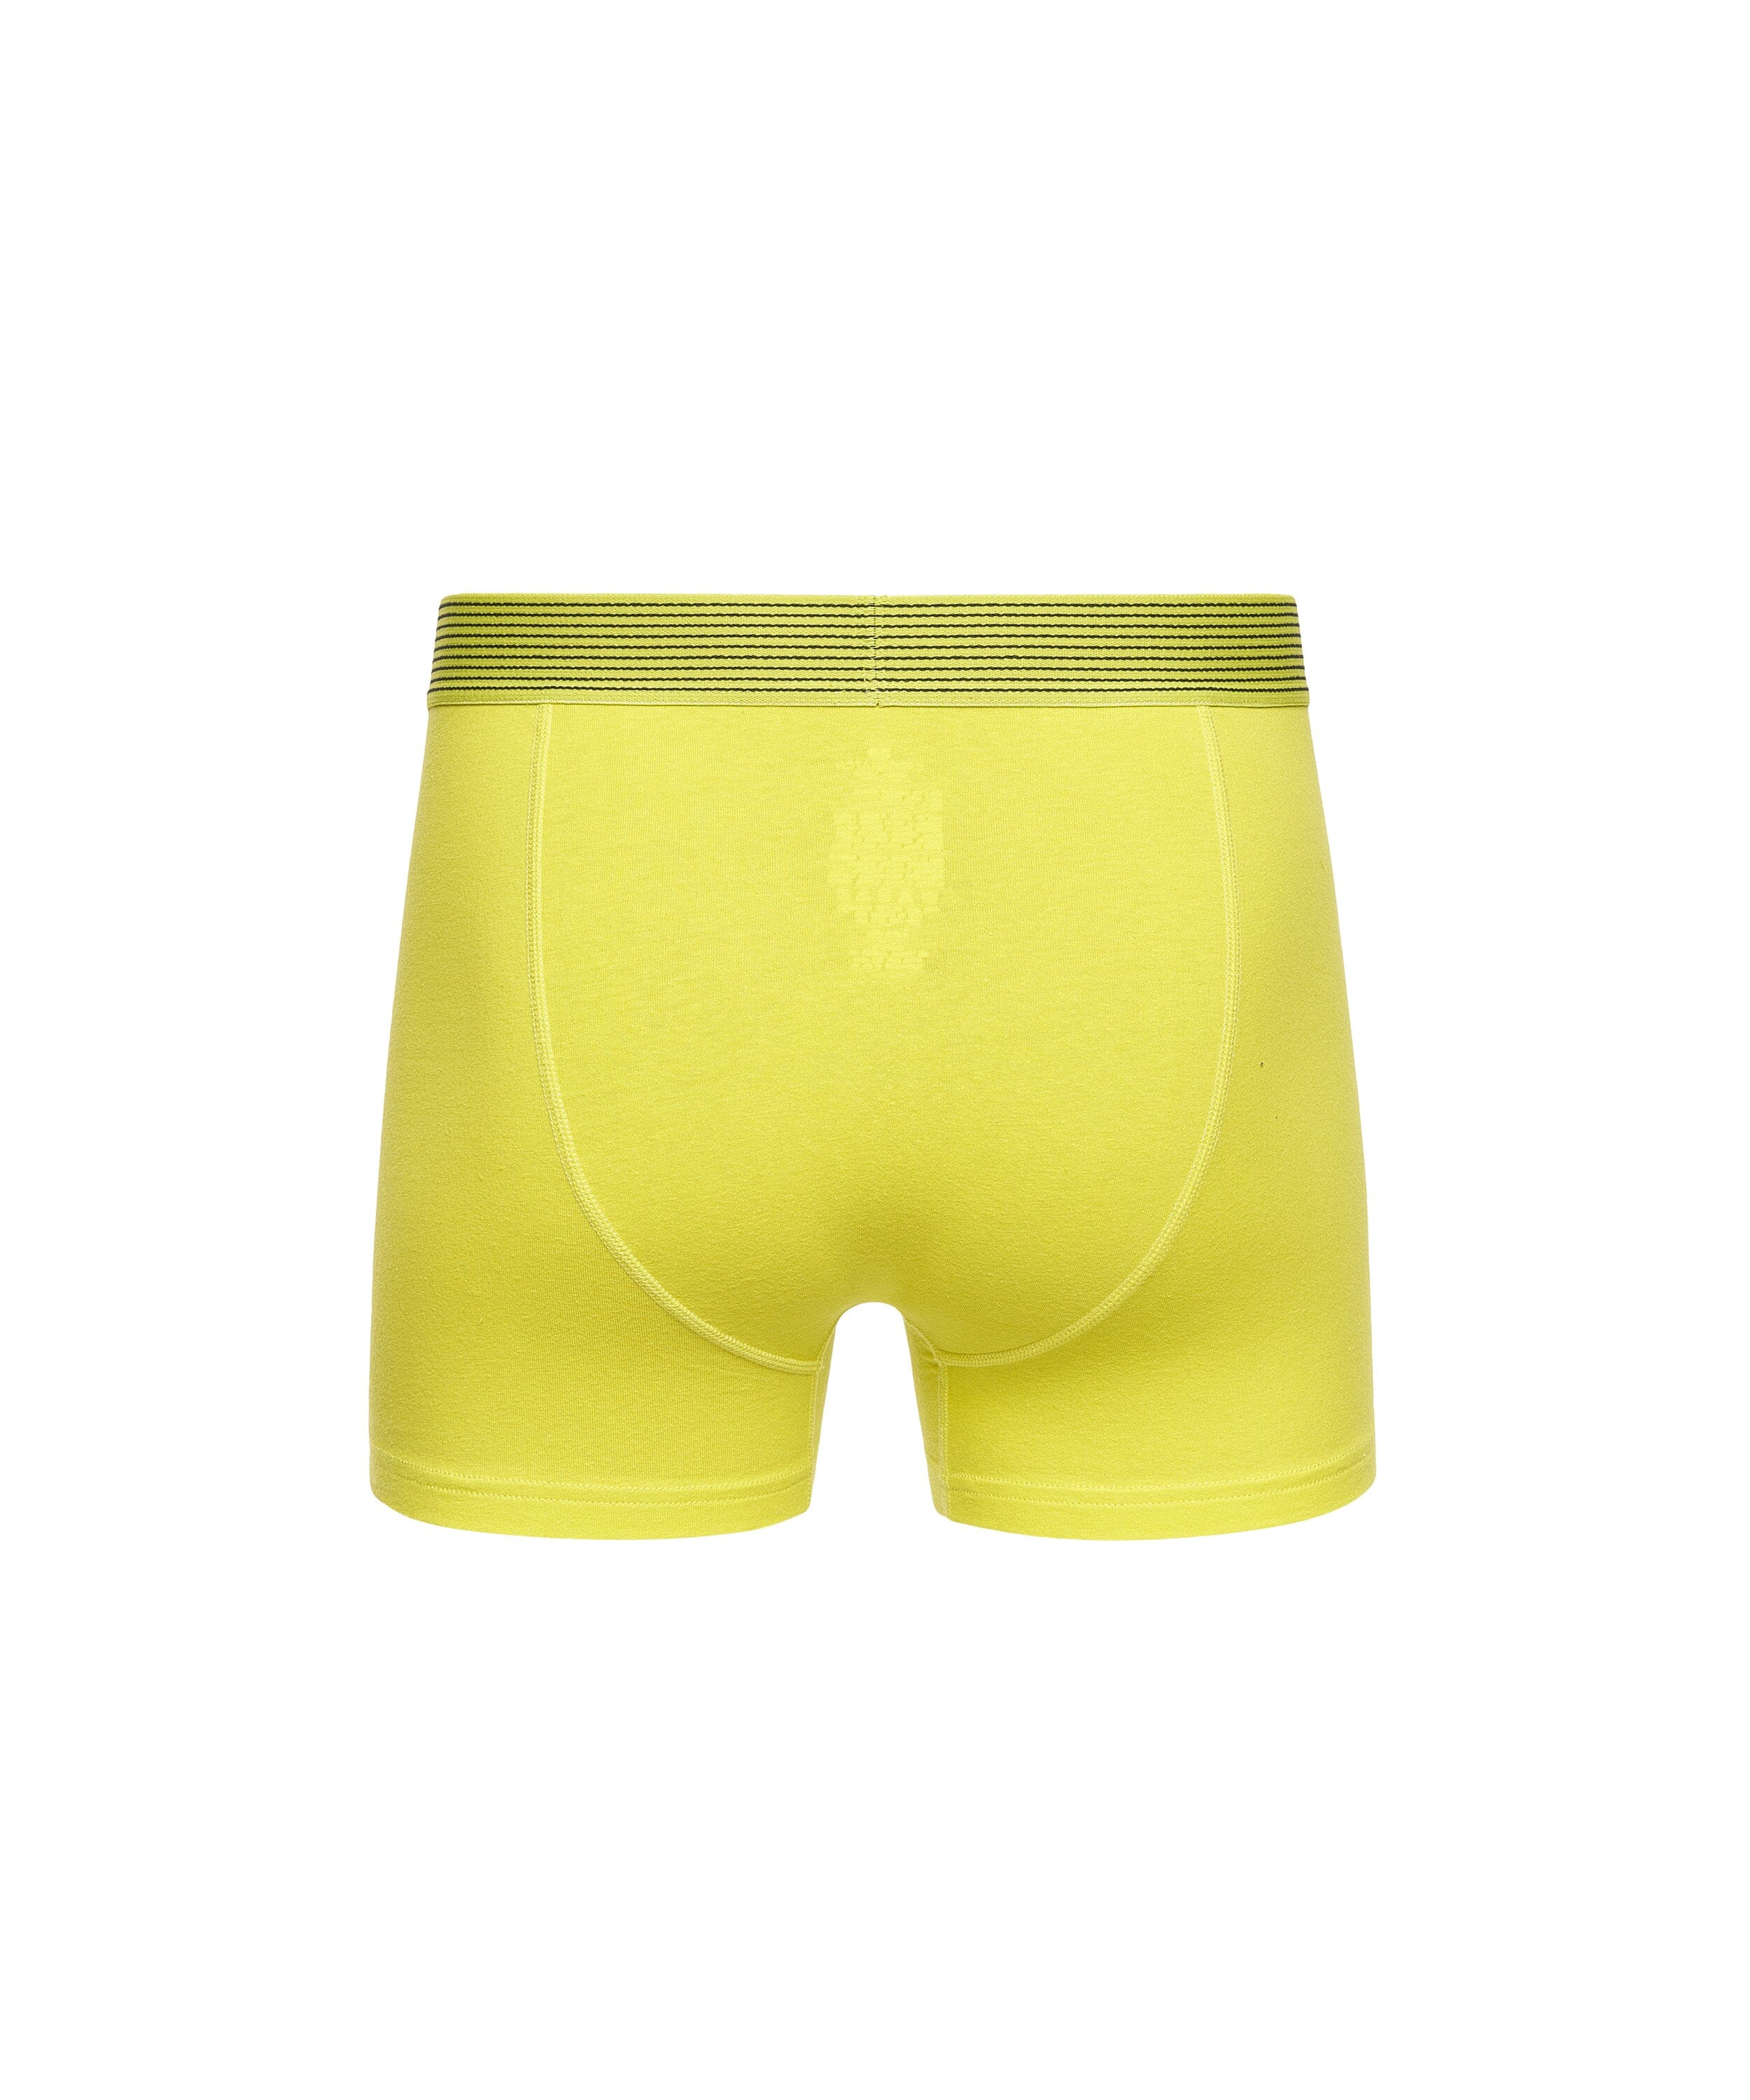 Dipper Boxers 5pk Neon Yellow